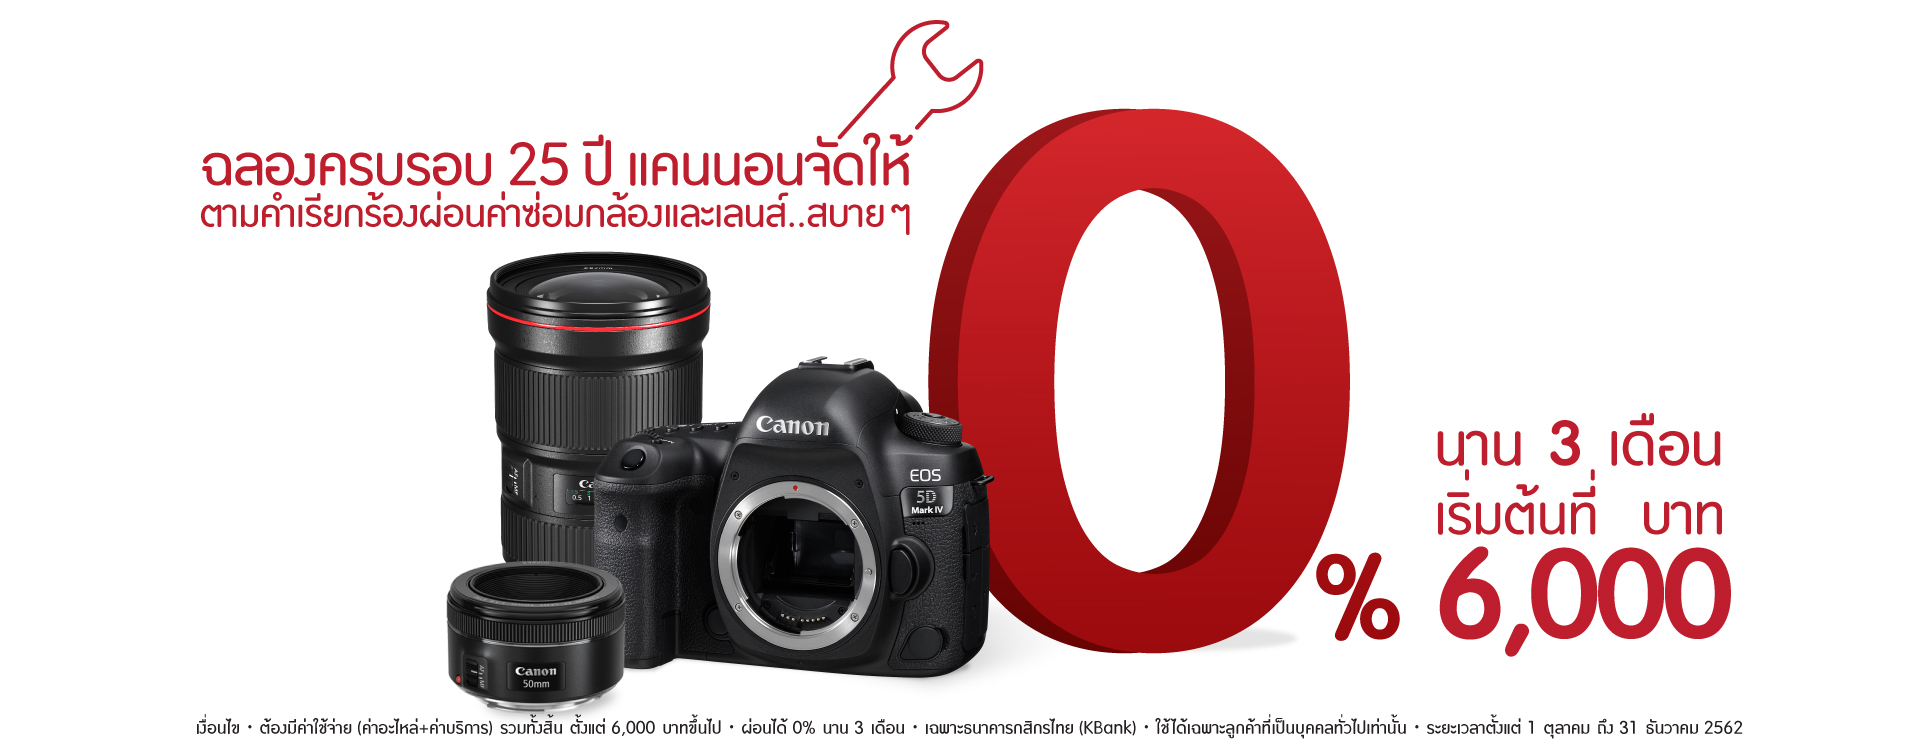 Home Canon Thailand - roblox login server